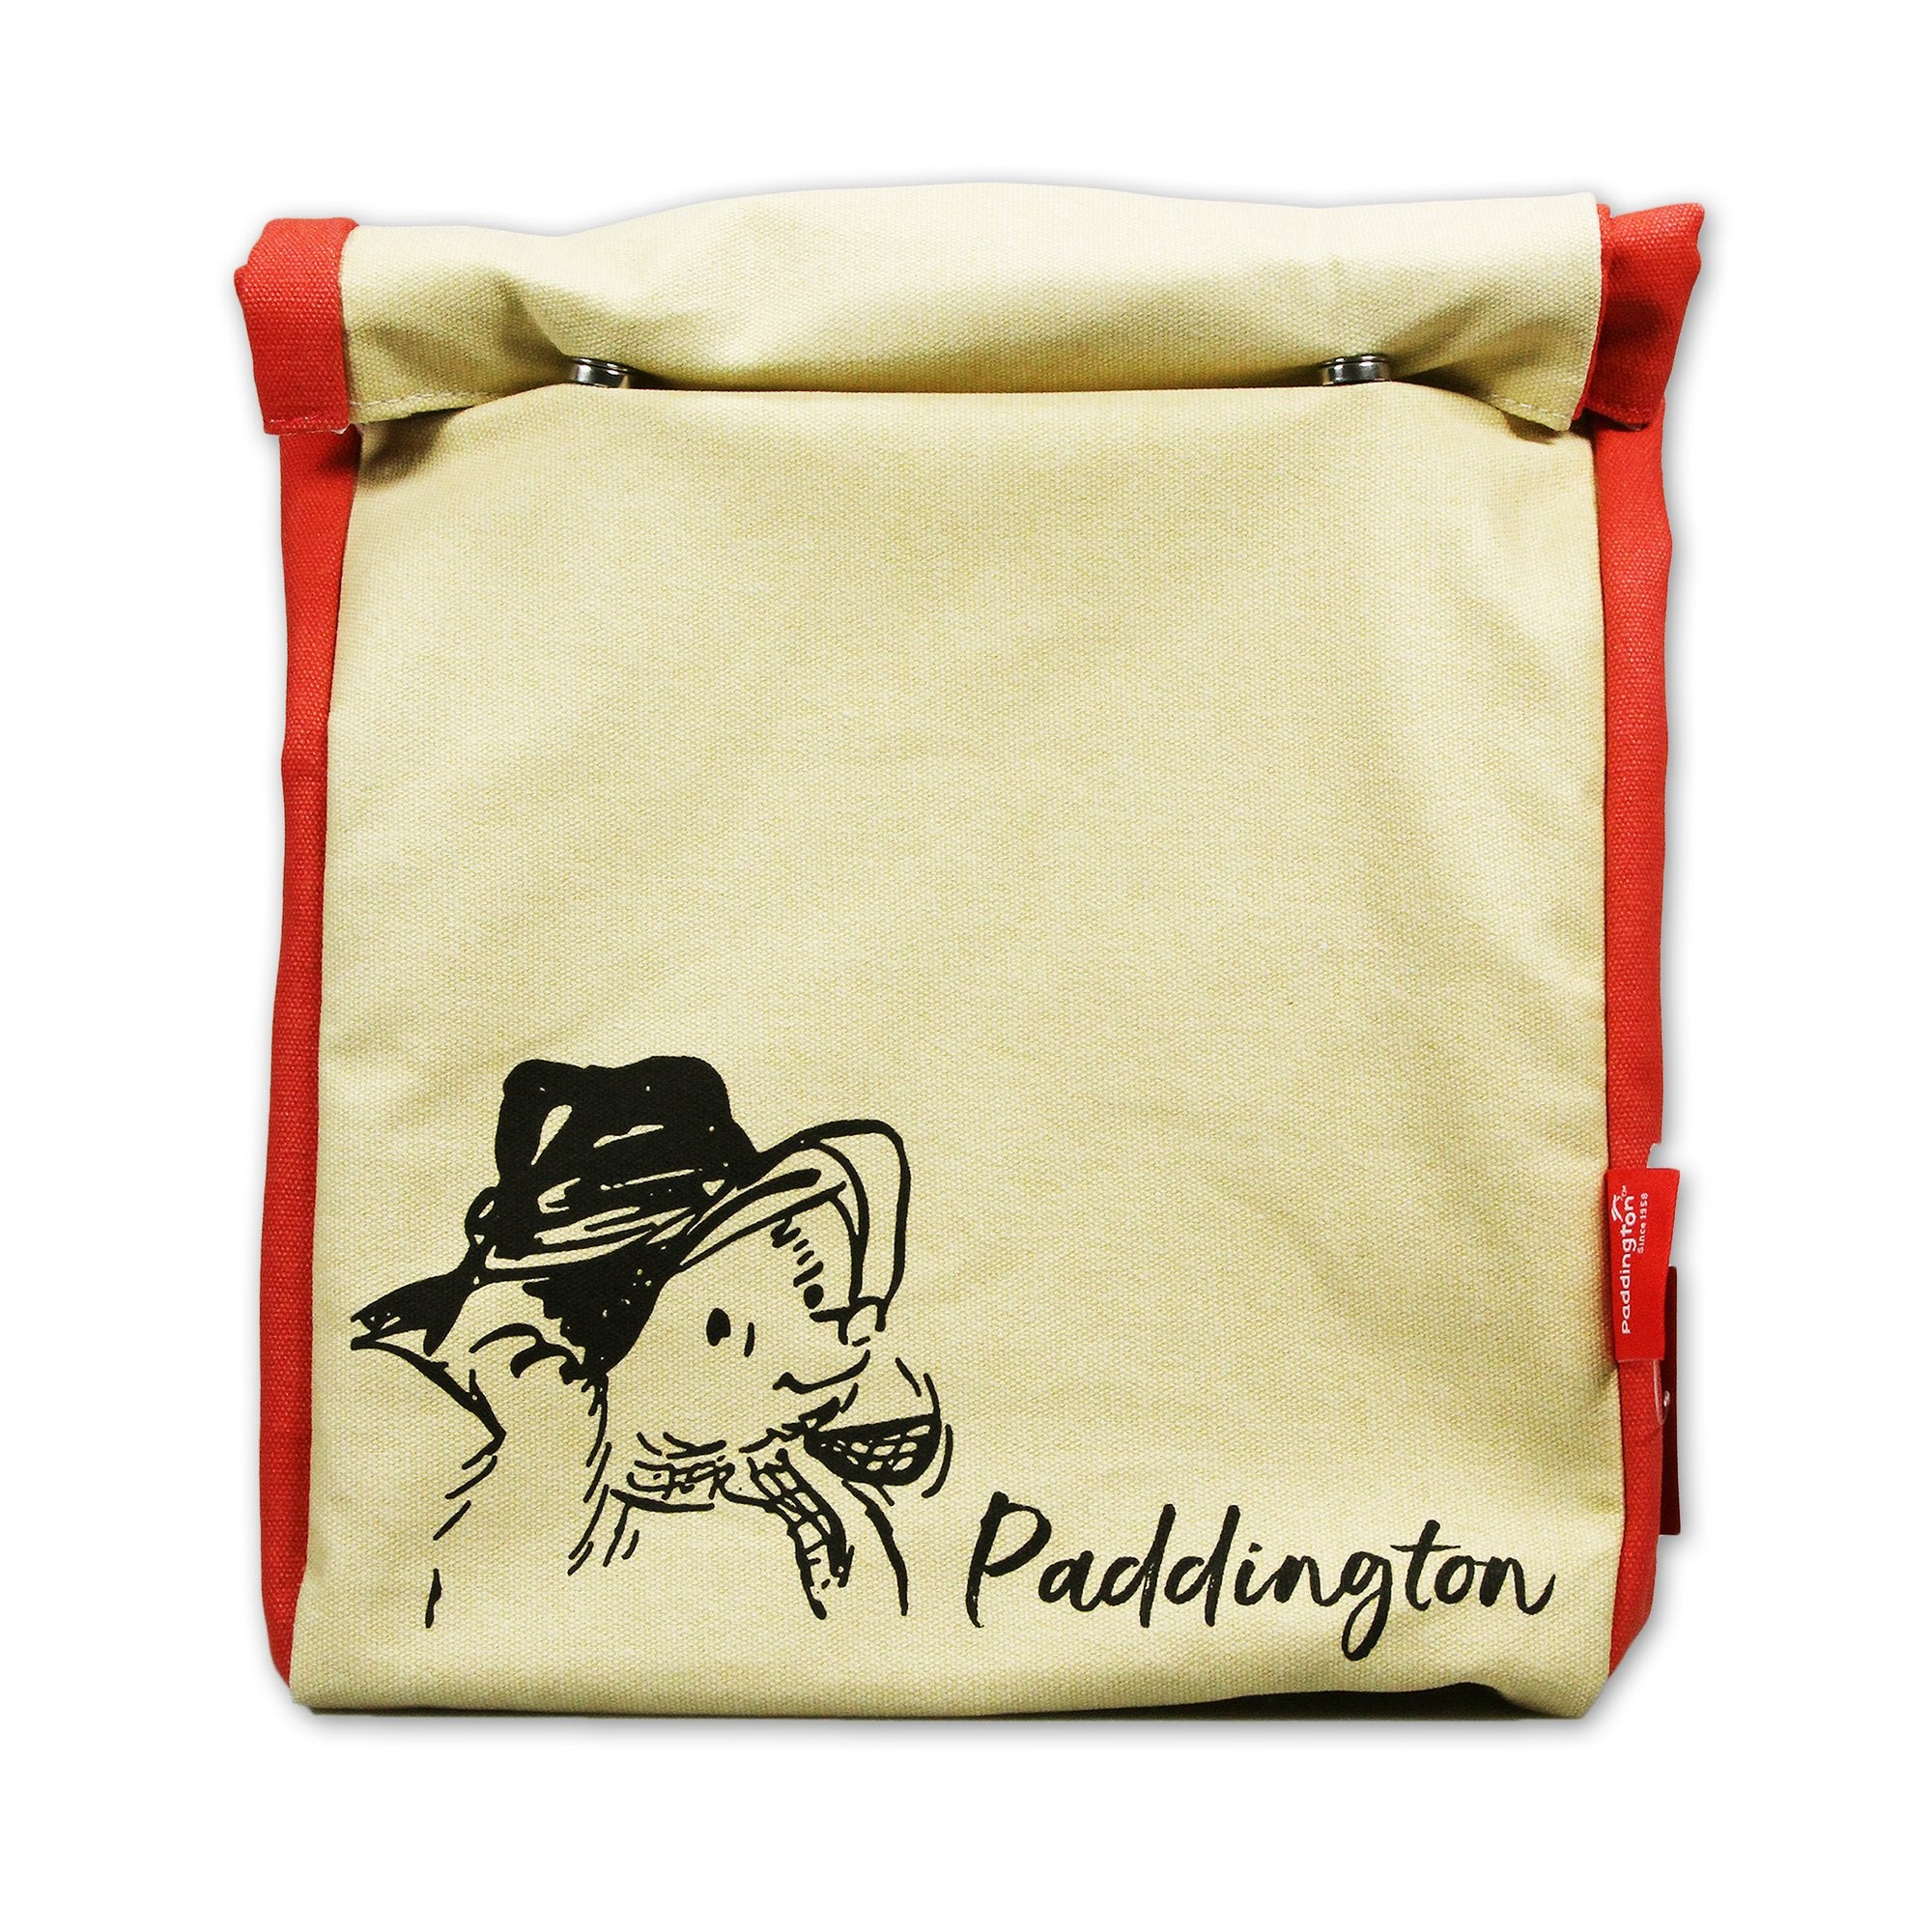 Paddington Bear 'Hat' Lunch Bag